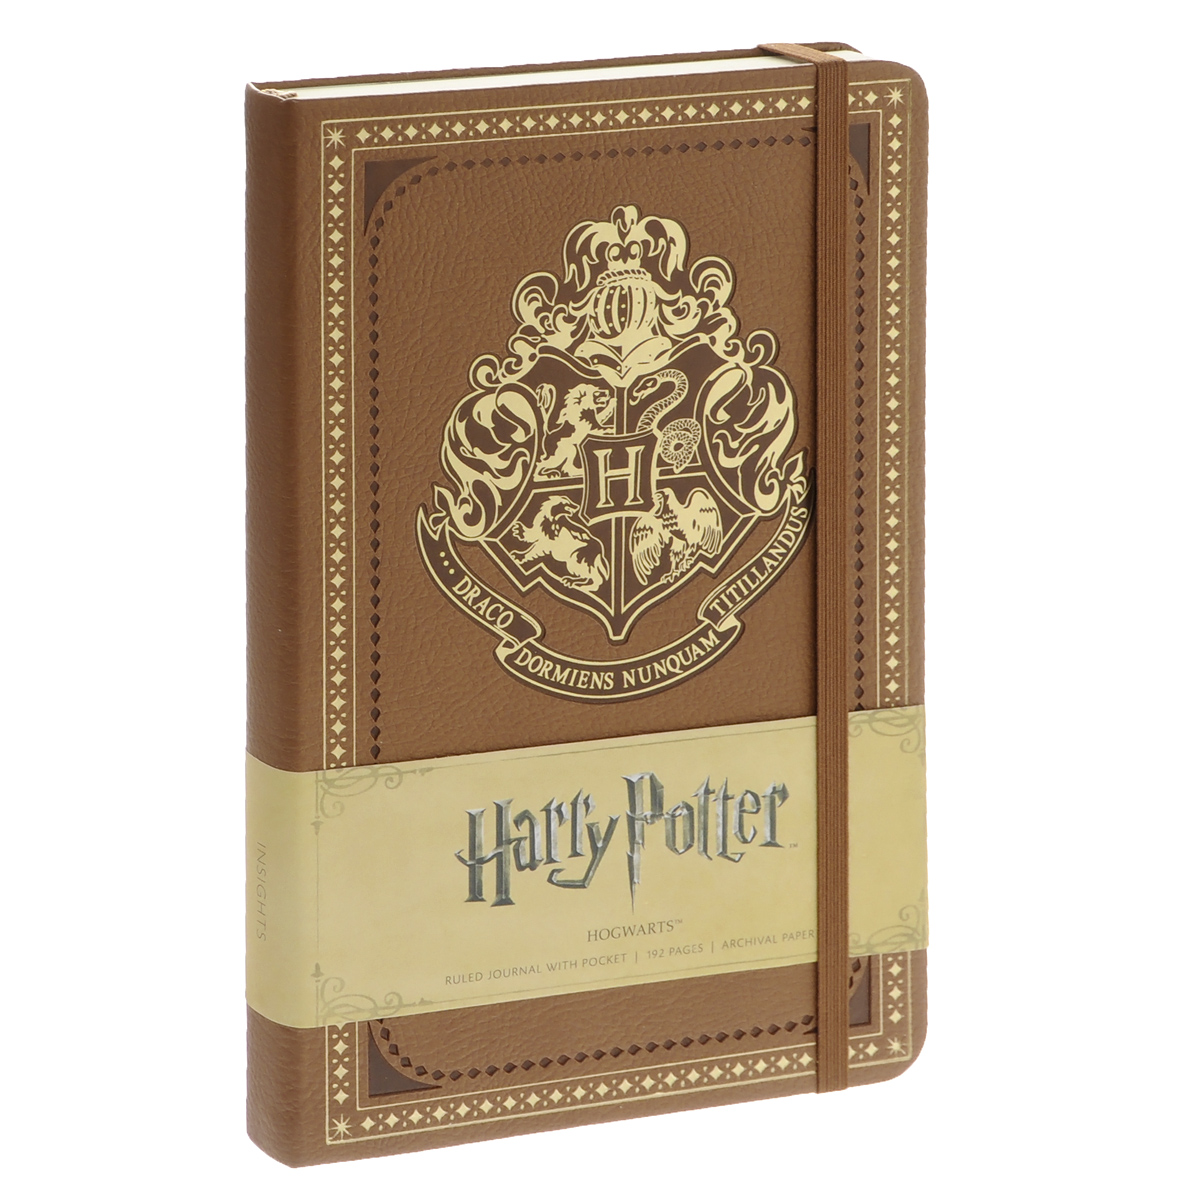 Harry Potter: Hogwarts: Ruled Journal with Pocket